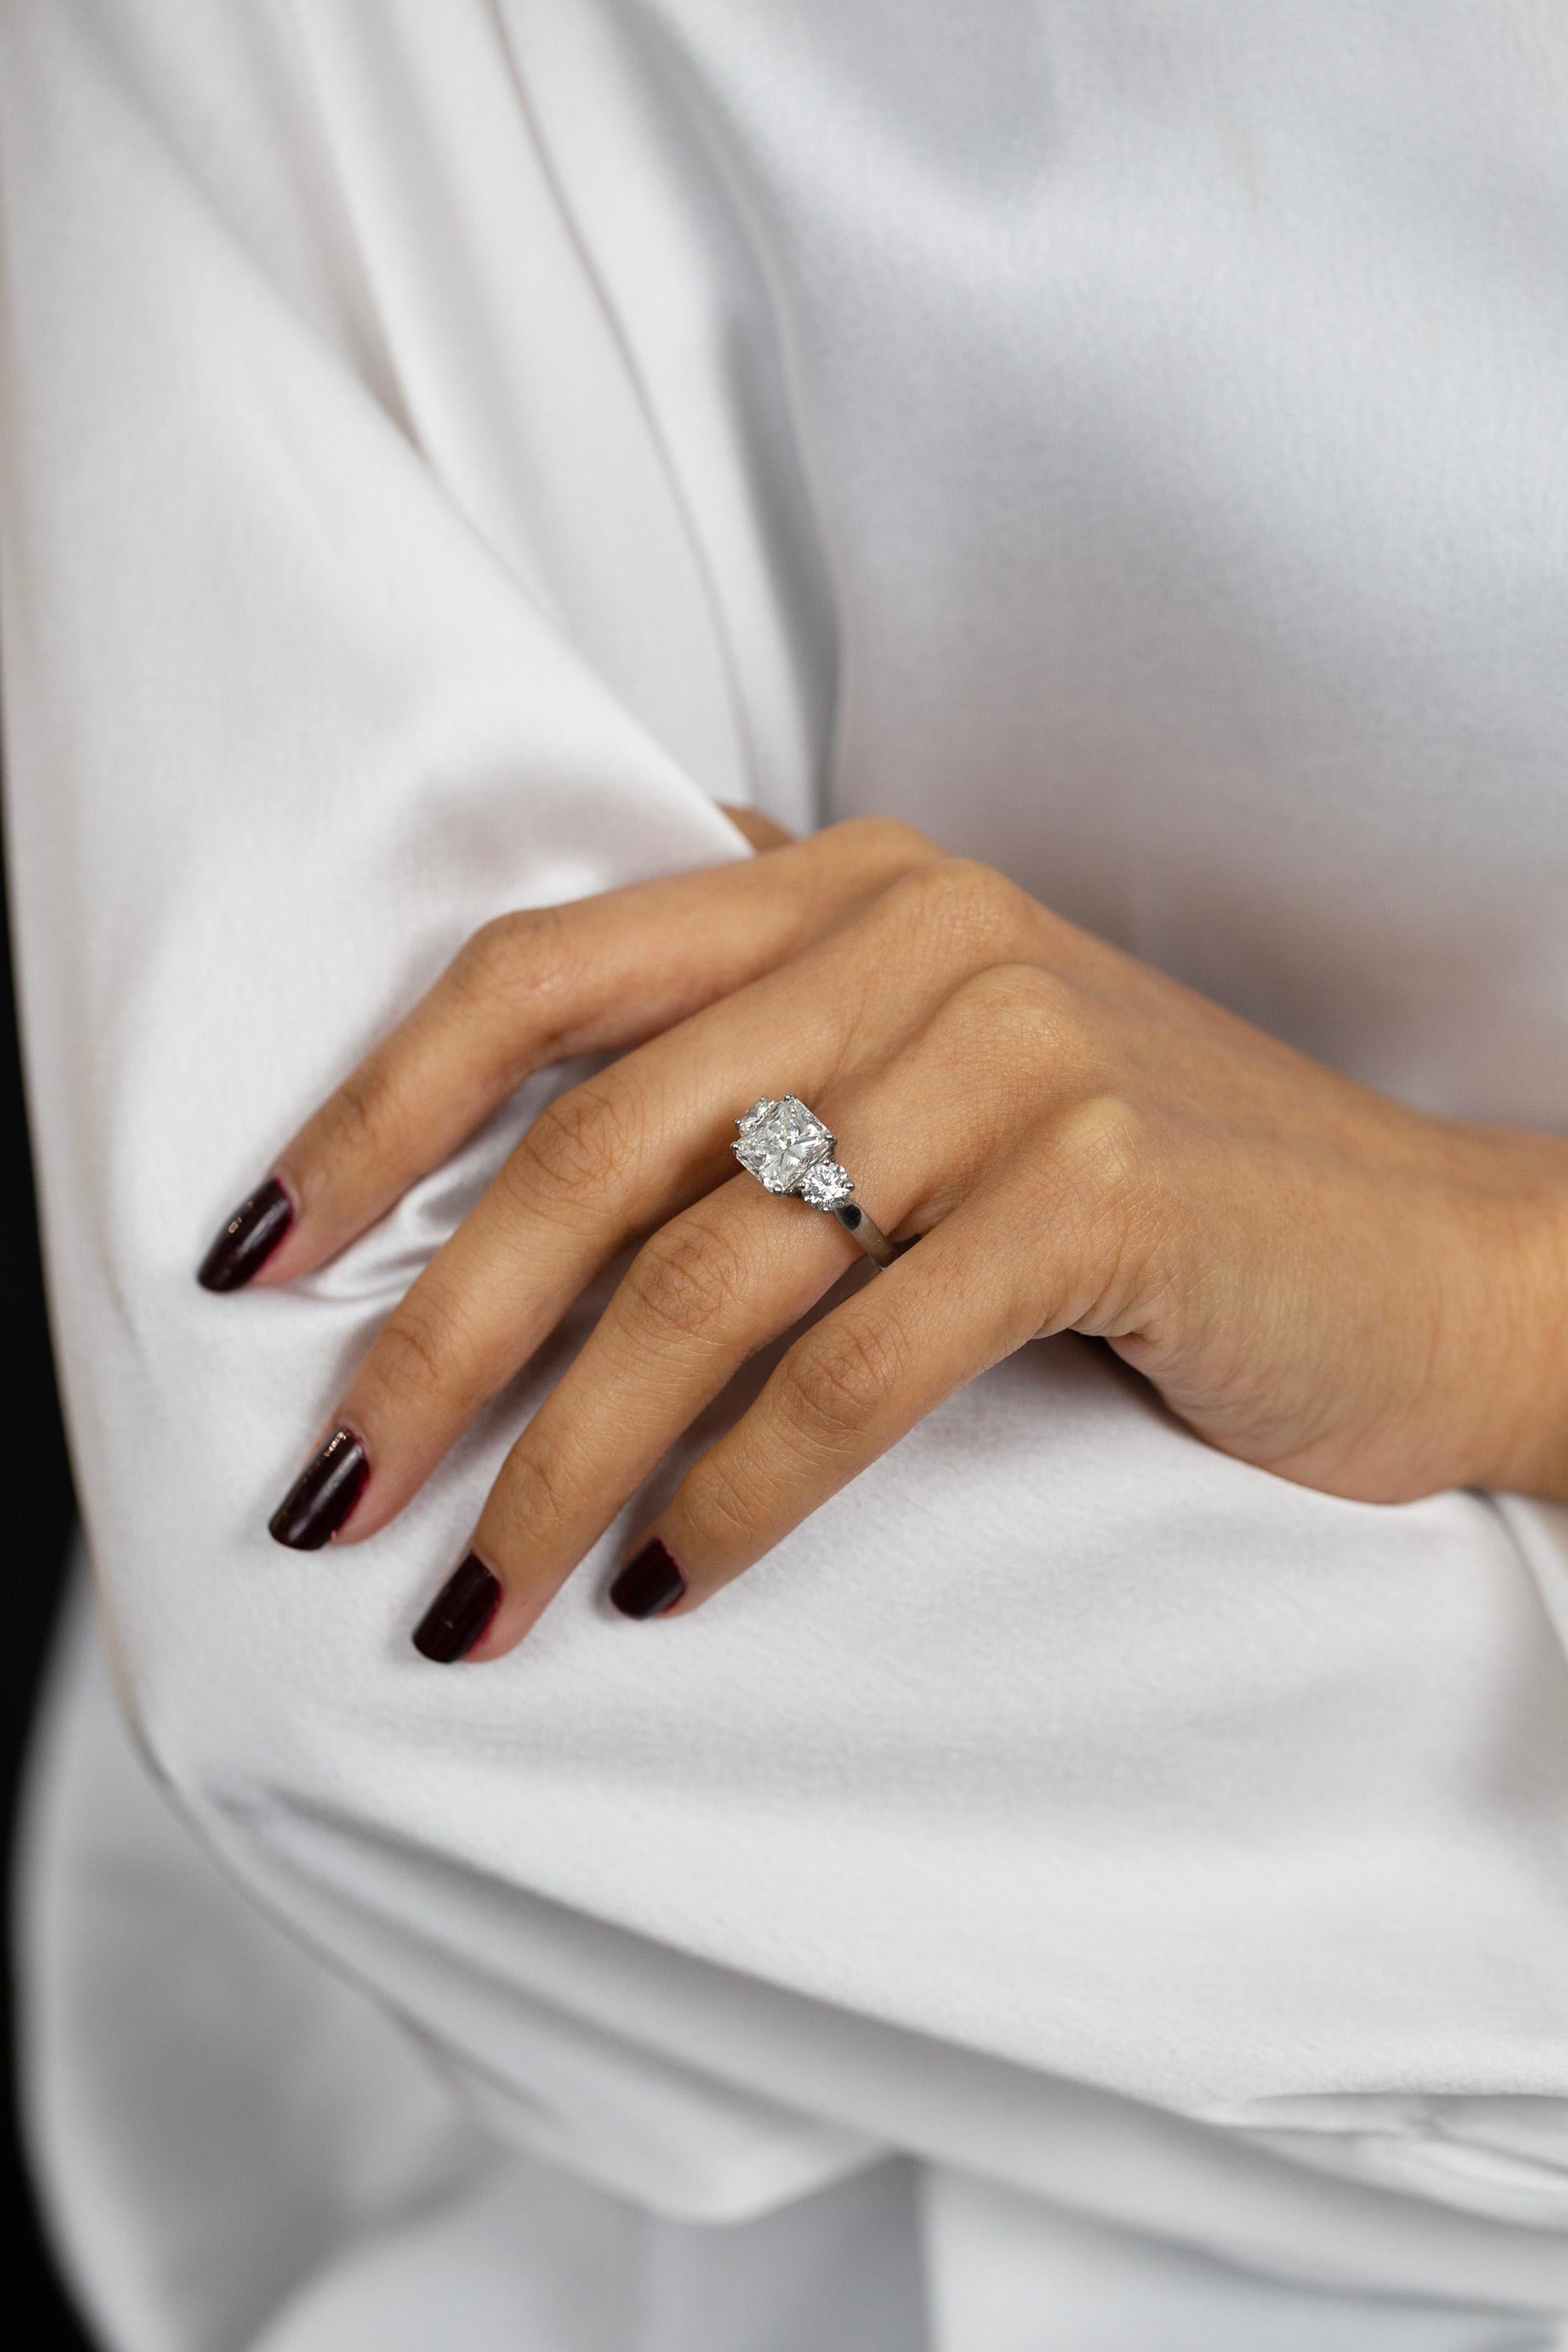 3 carat radiant cut natural diamond ring